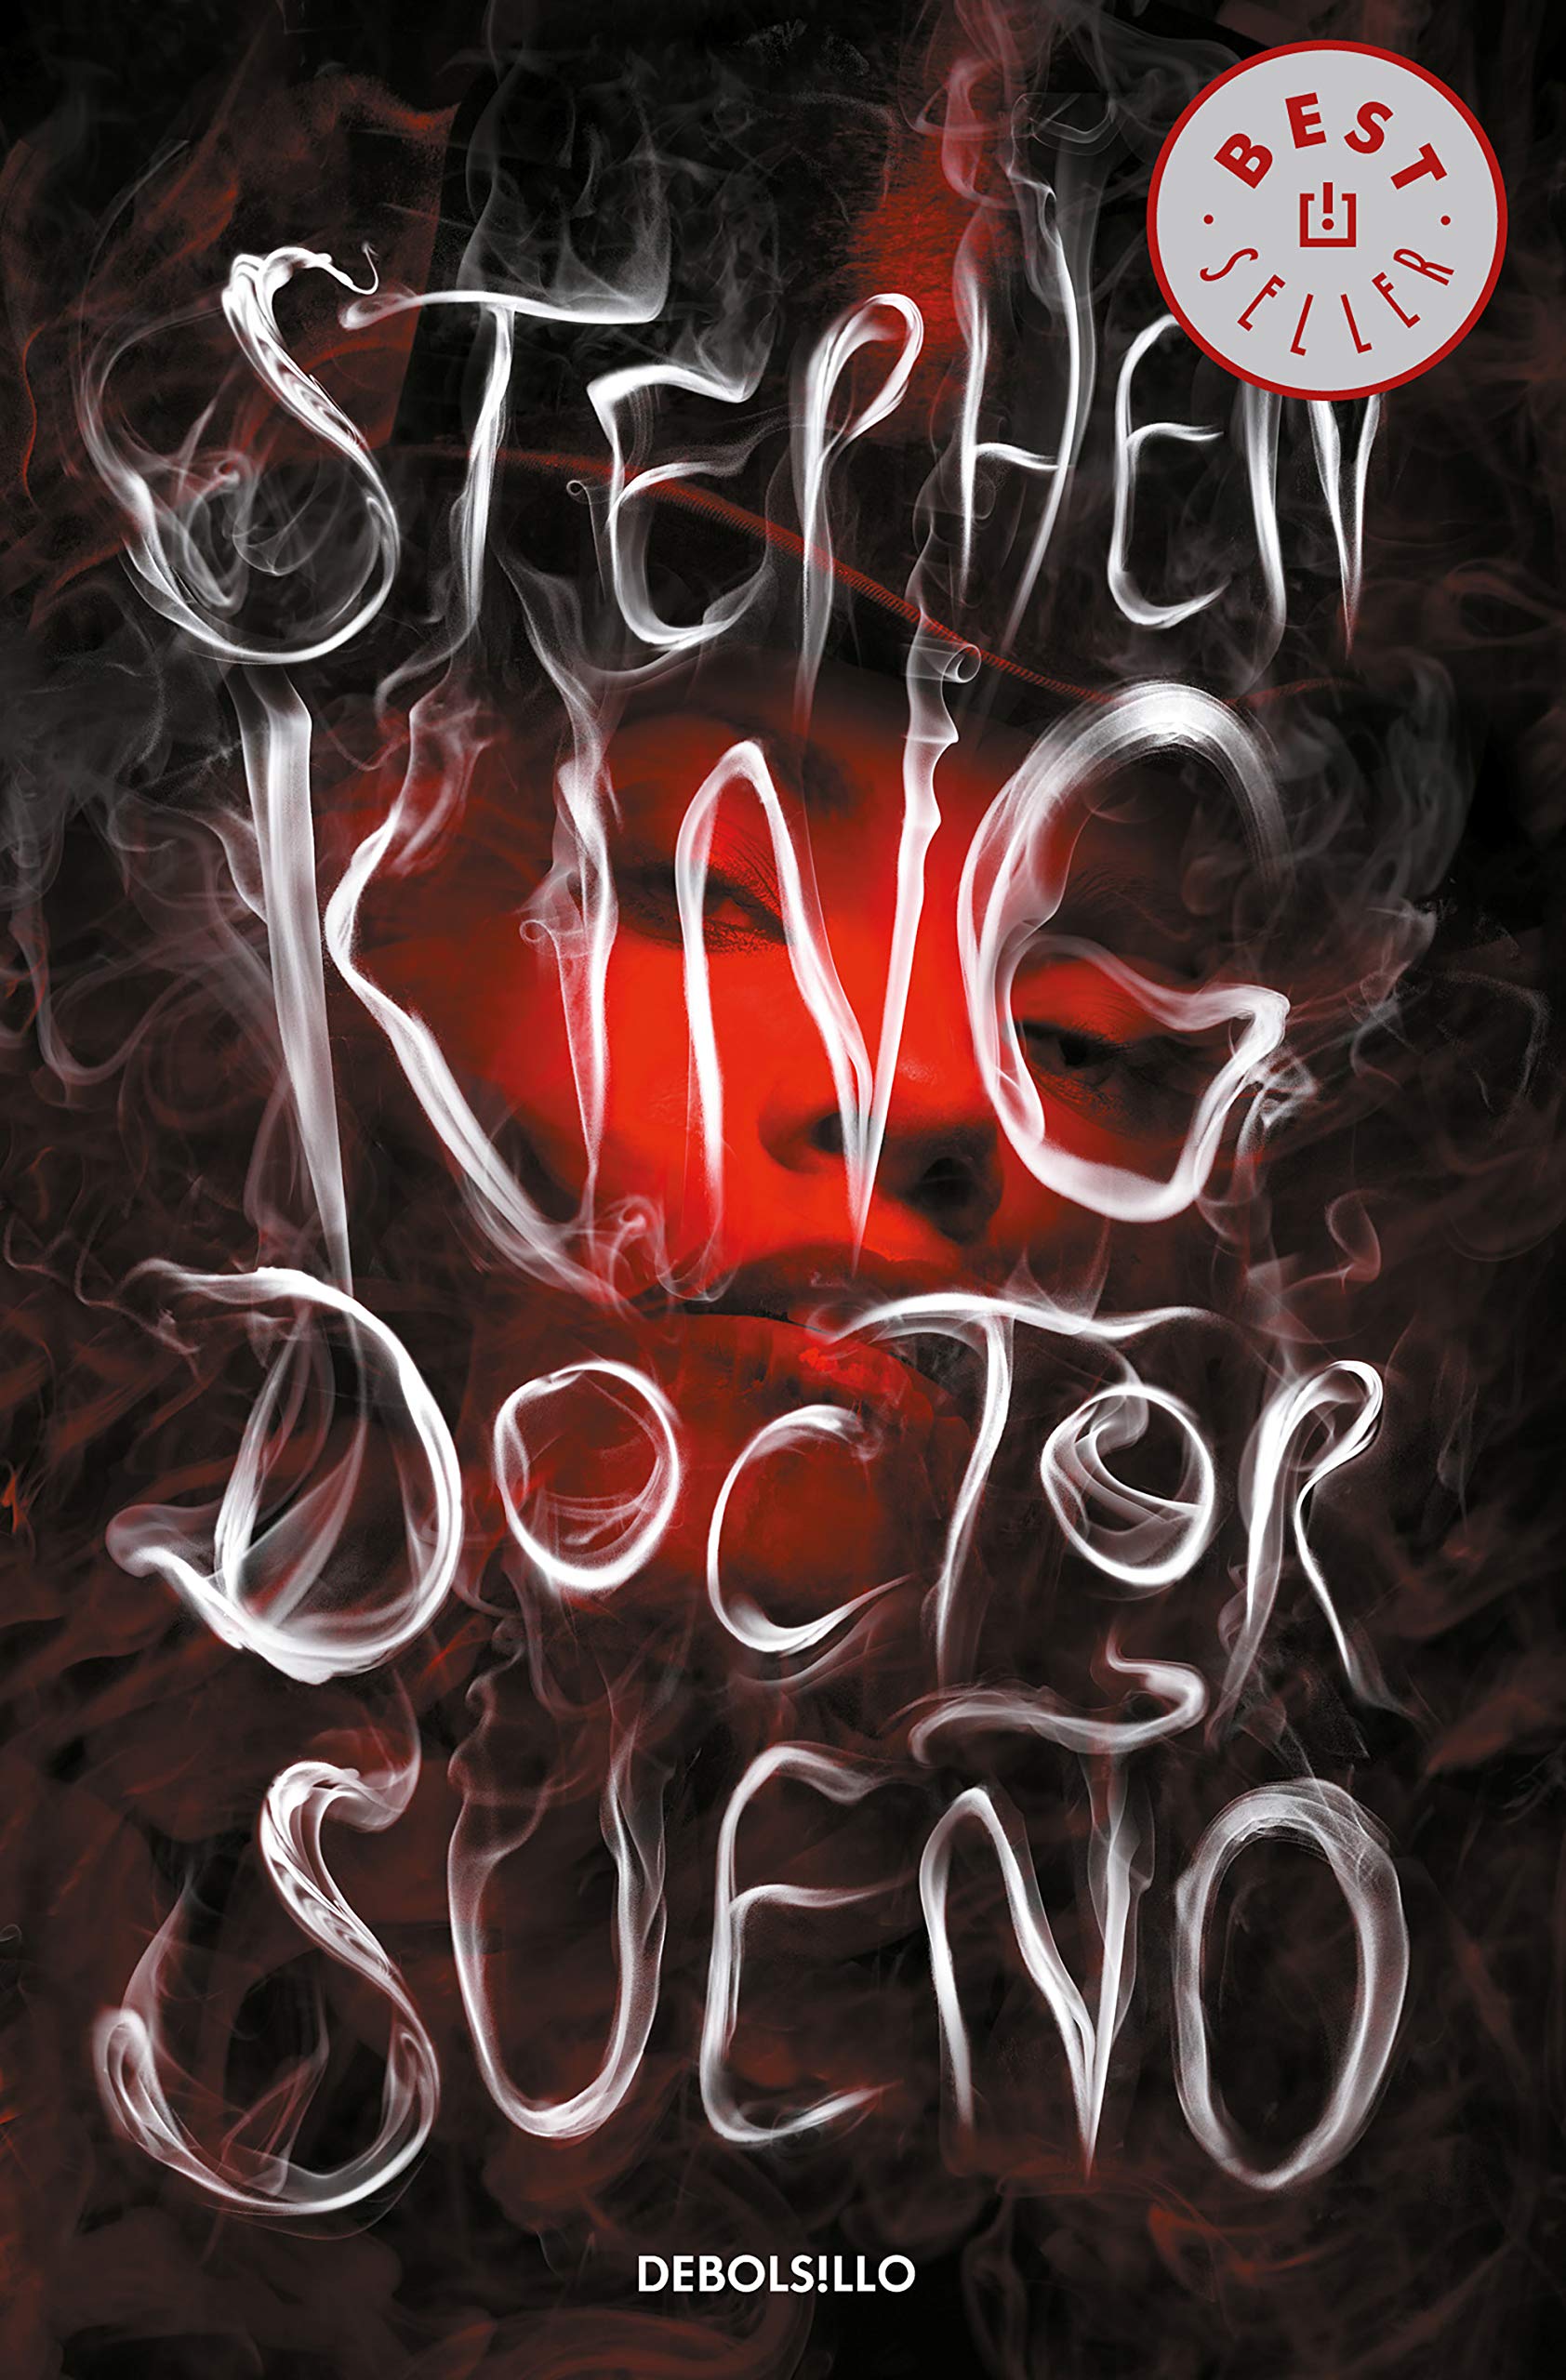 “Doctor sueño” de Stephen King